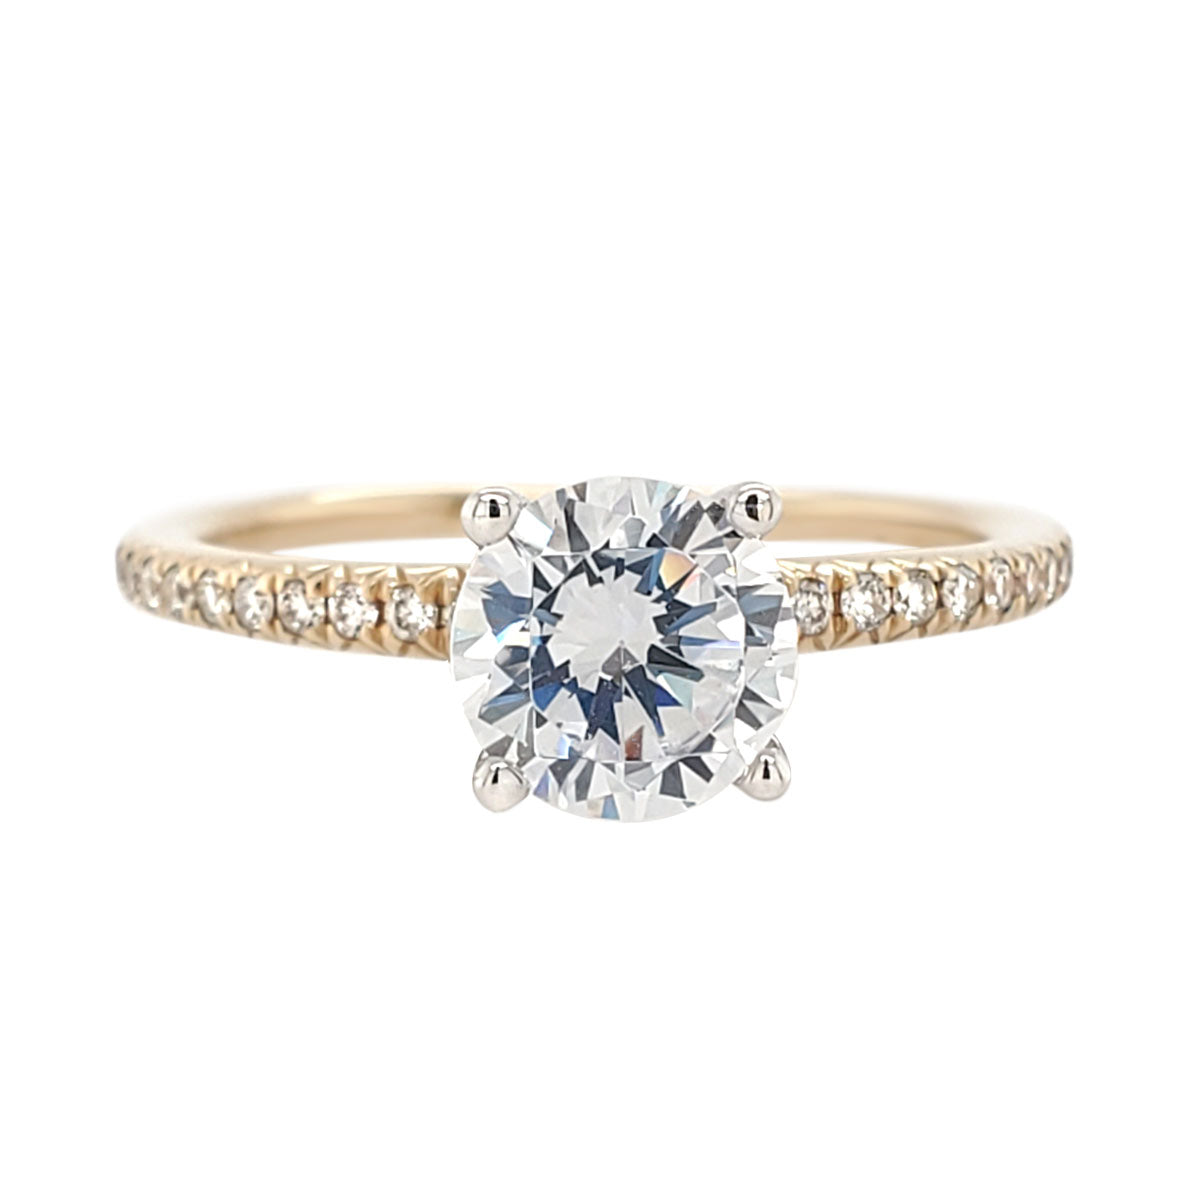 14K White Gold Pavé Split Shank Contour Diamond Engagement Ring